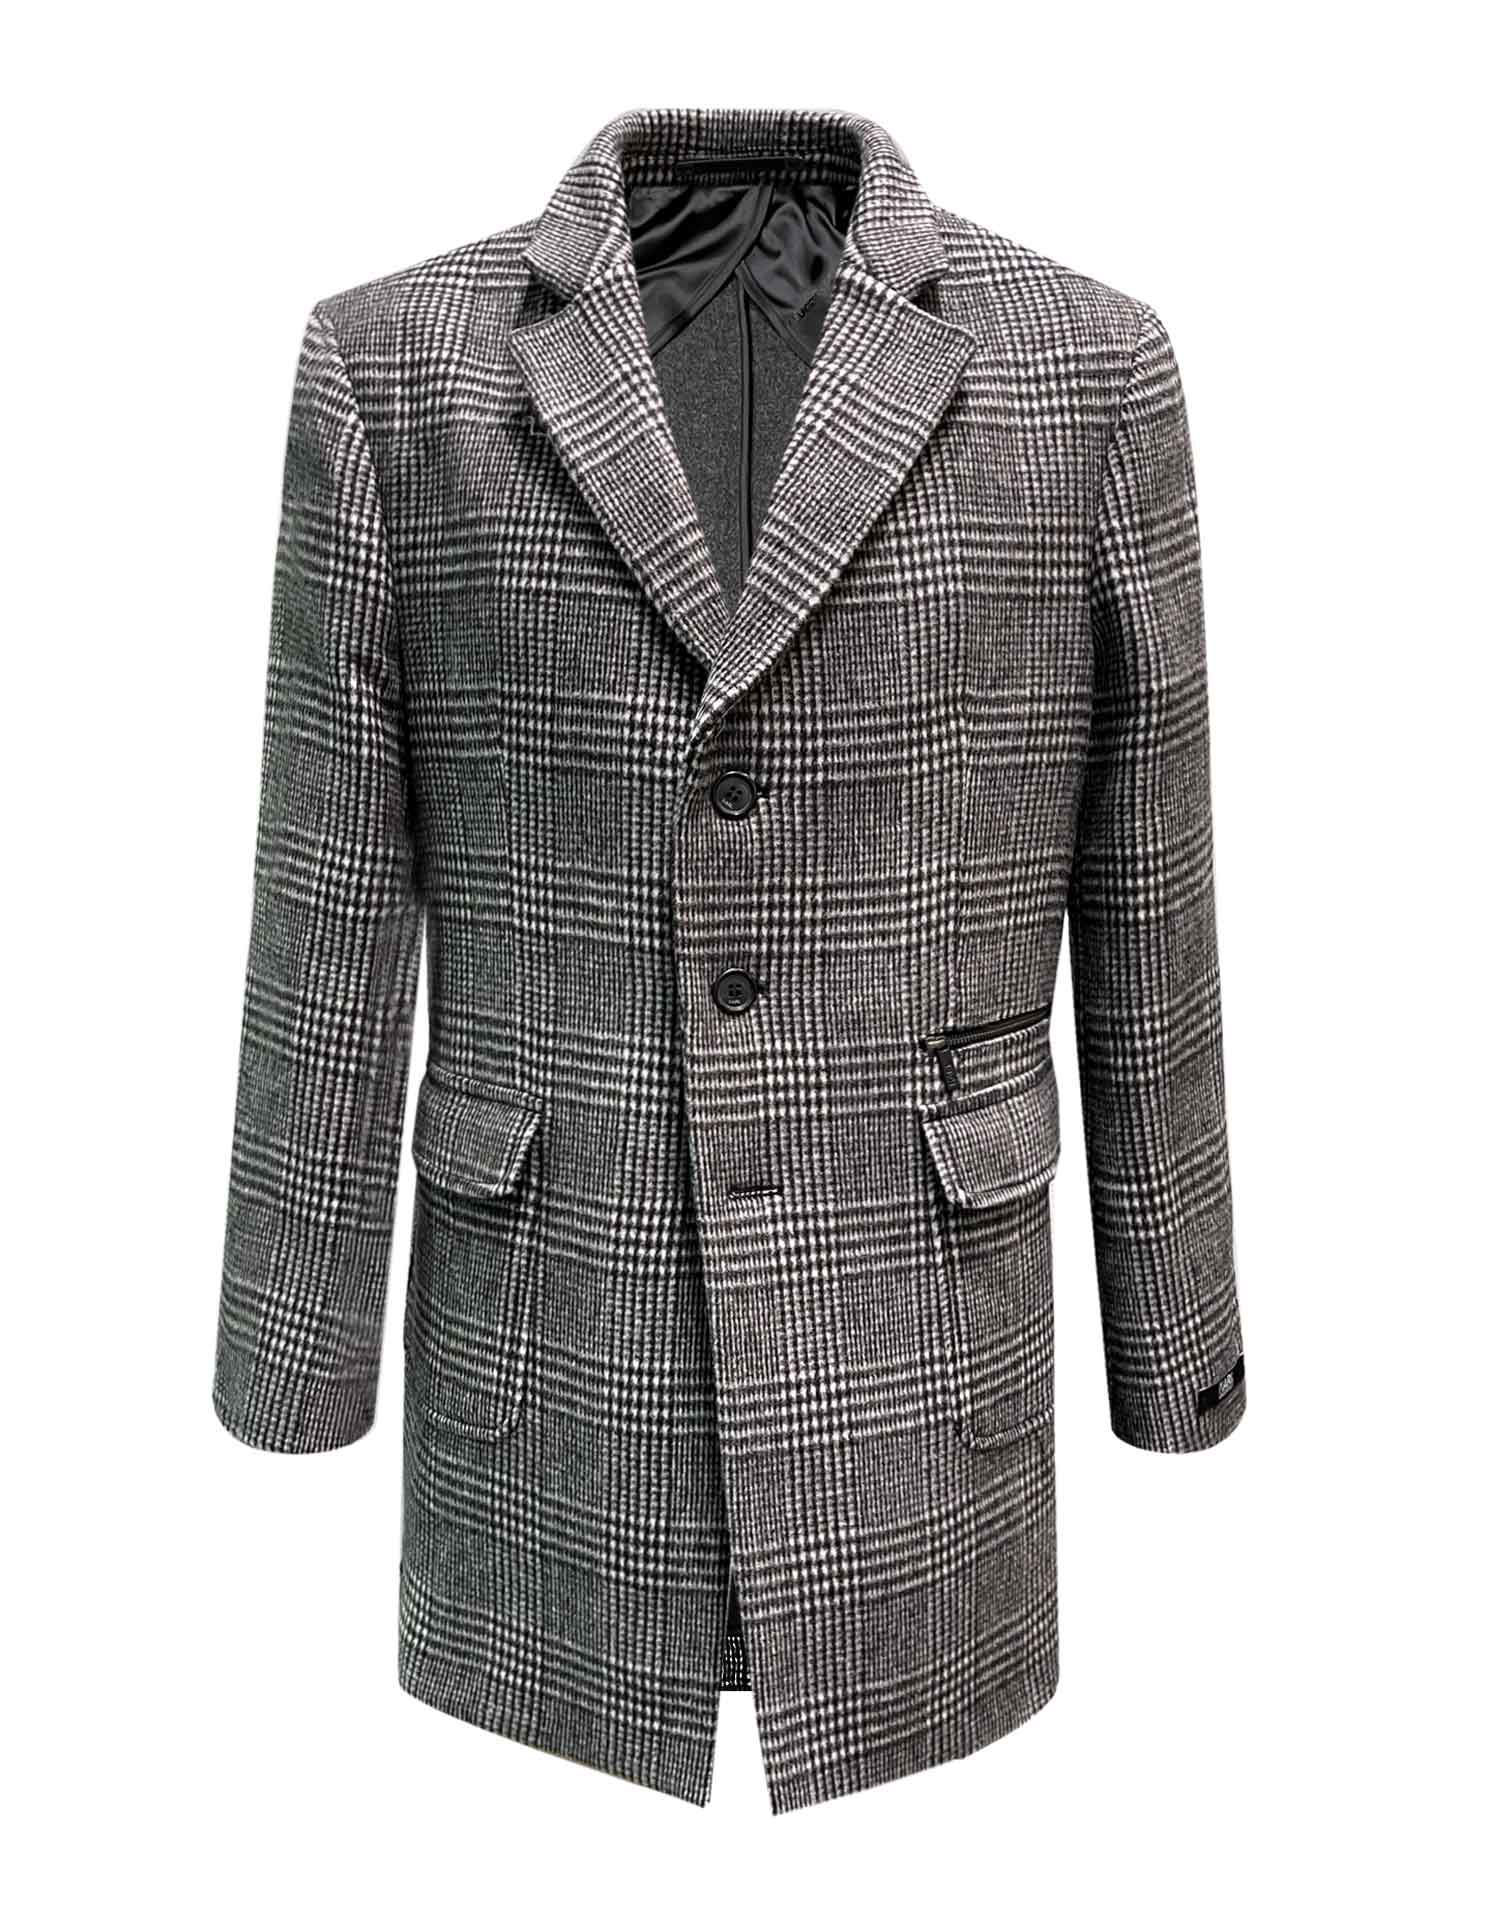 Karl Lagerfeld Paw Check Wool Overcoat - George Harrison | Designer ...